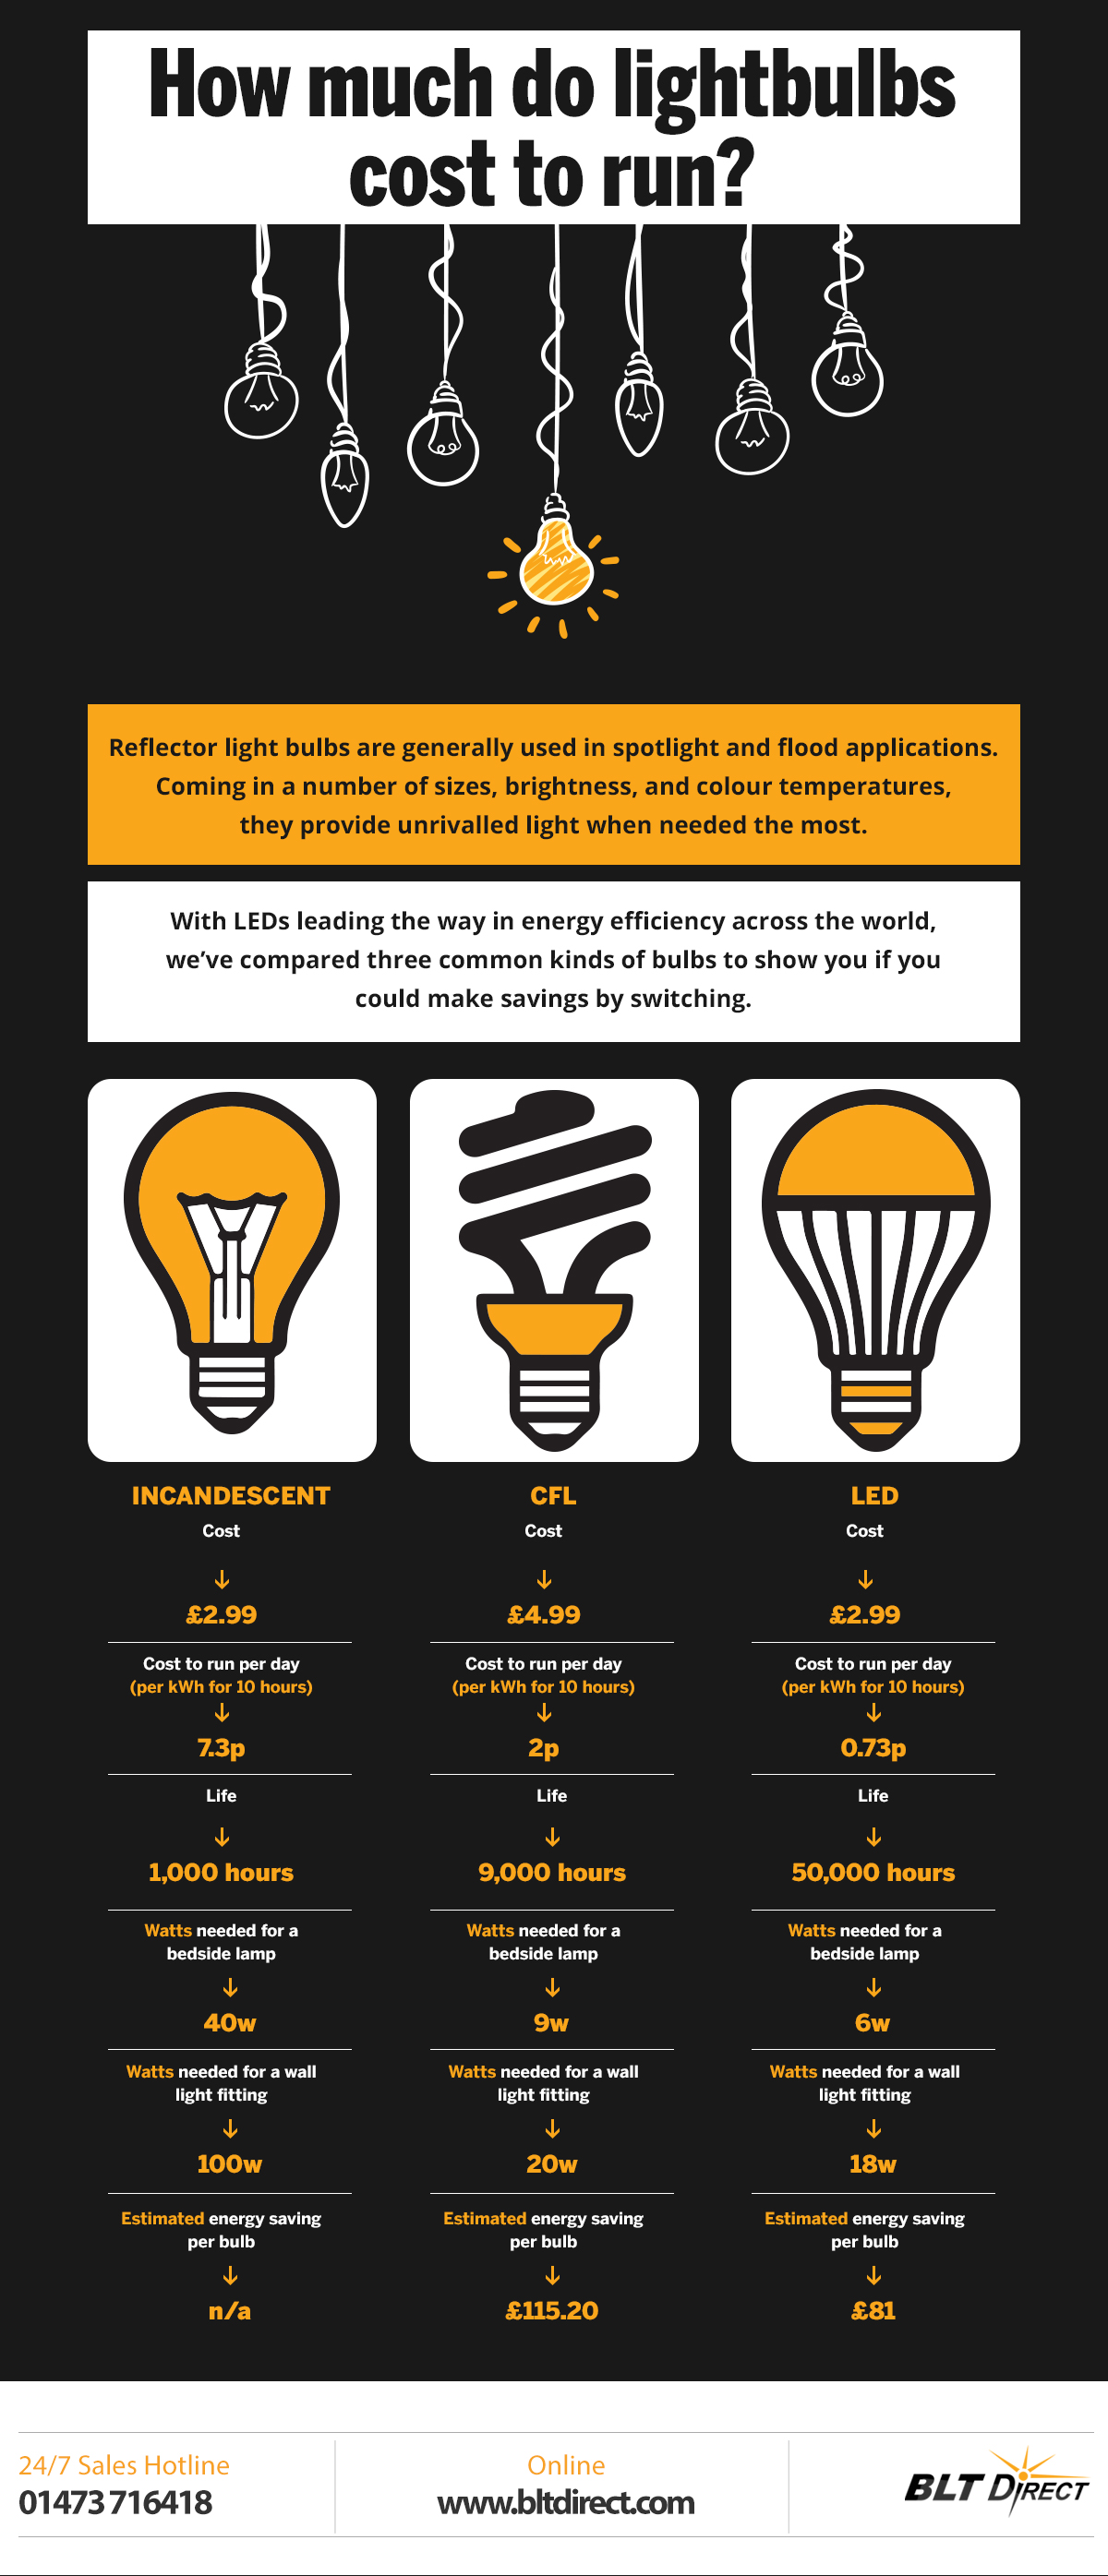 How Much Do Lightbulbs Cost To Run?